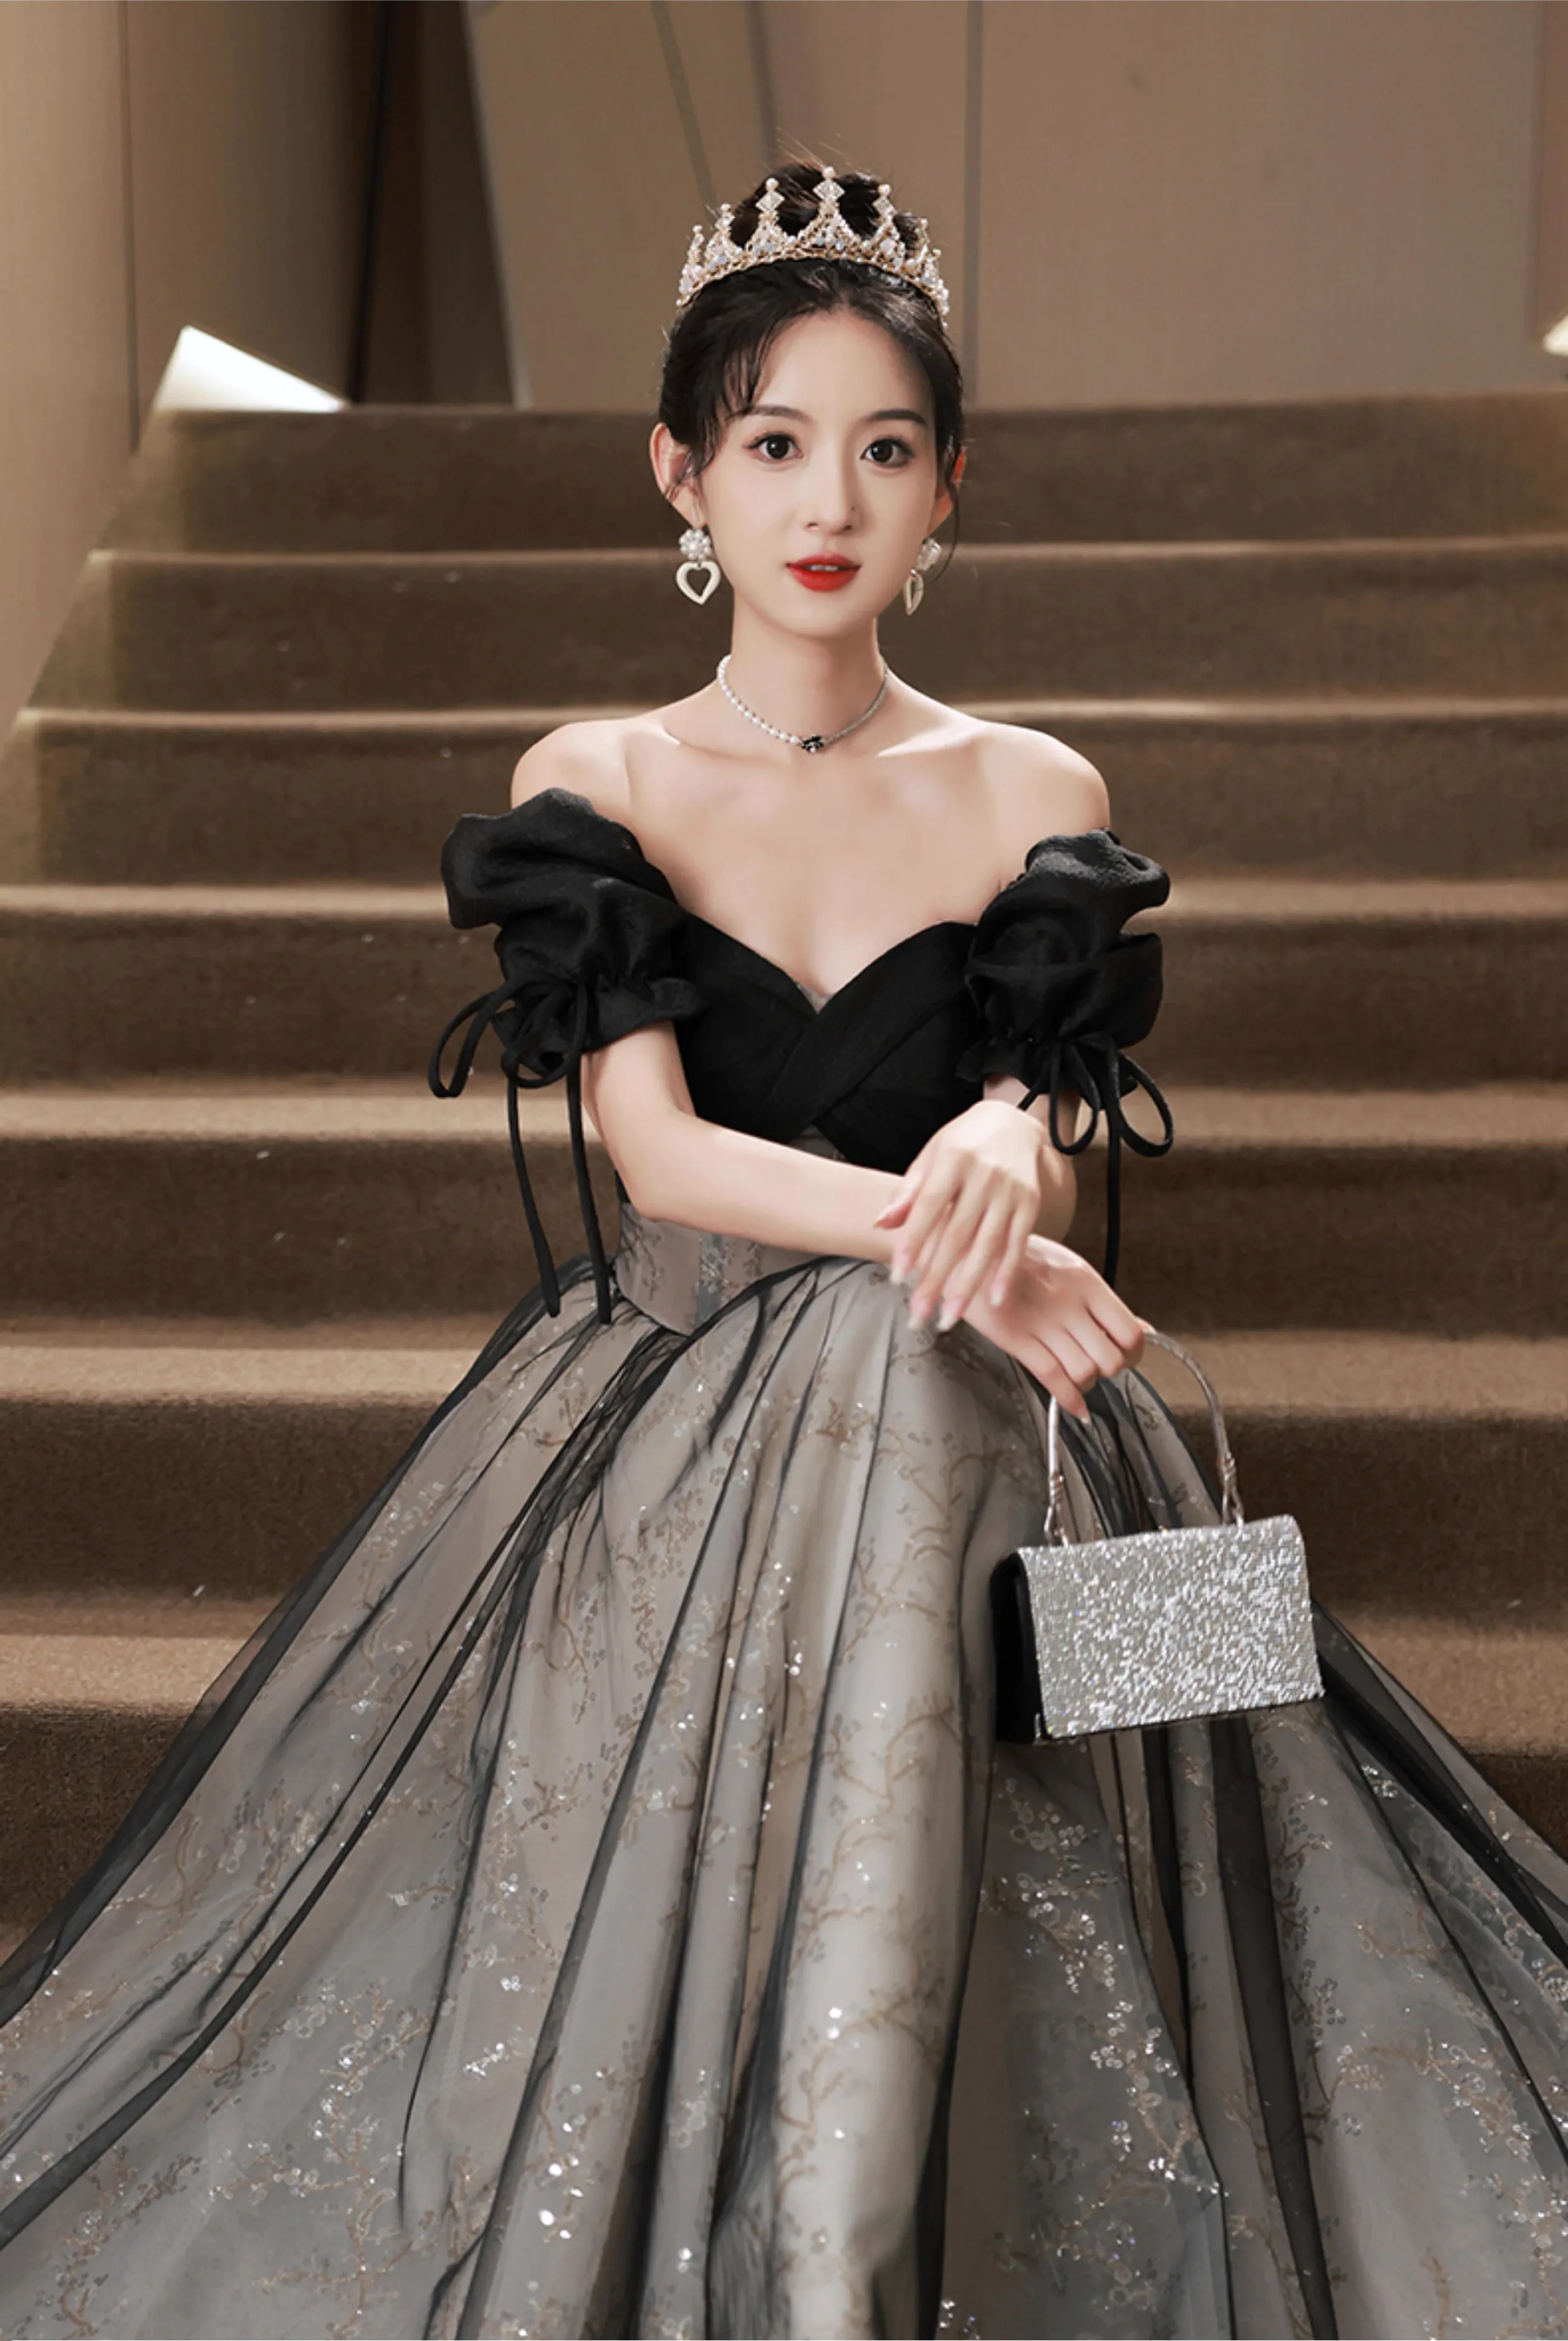 Fashion-Black-Off-the-Shoulder-Audrey-Hepburn-Style-Cocktail-Party-Dress12